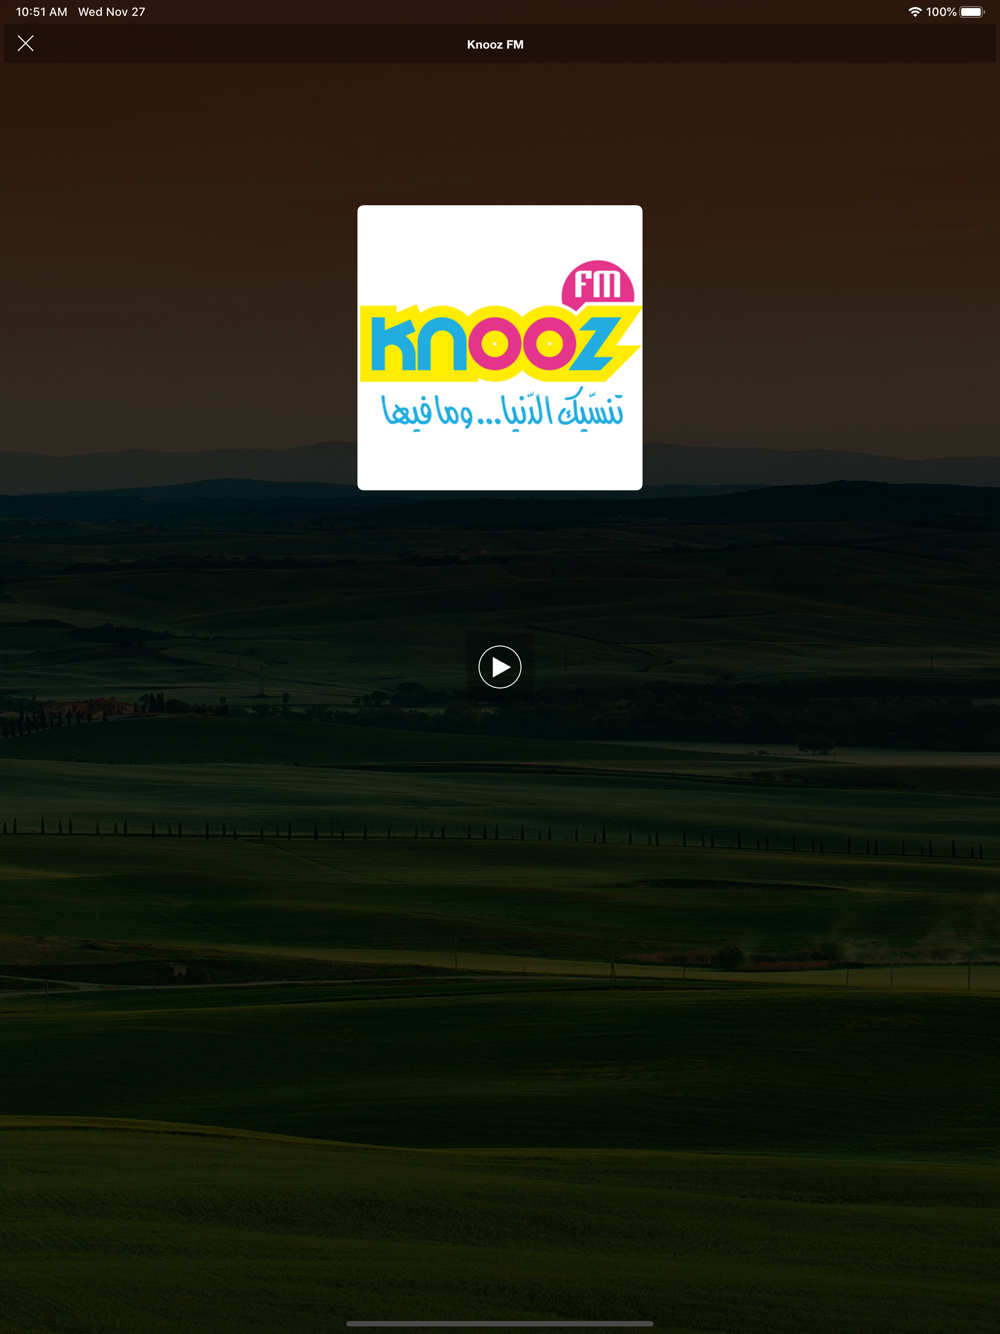 Knooz FM - إذاعة كنوز إف إم Free Download App for iPhone - STEPrimo.com